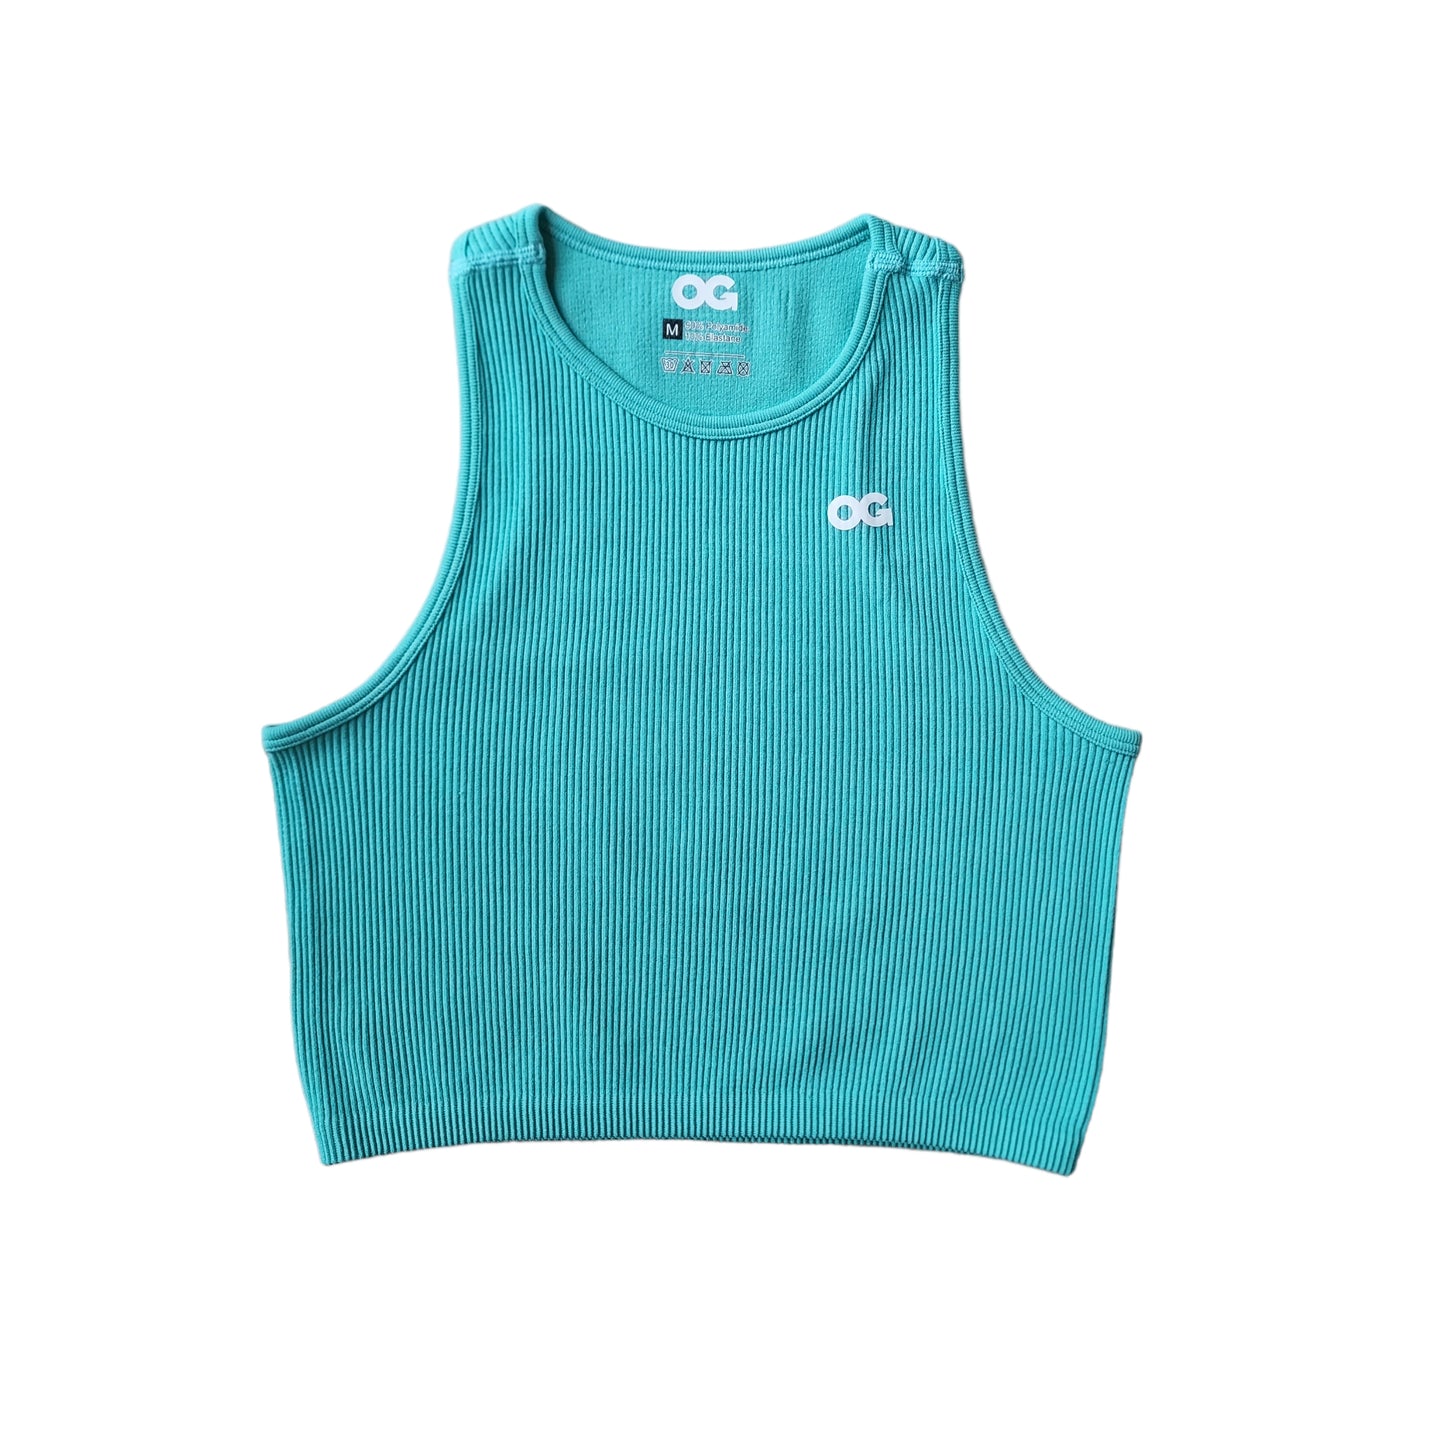 Razor Activewear Top (Turquoise)